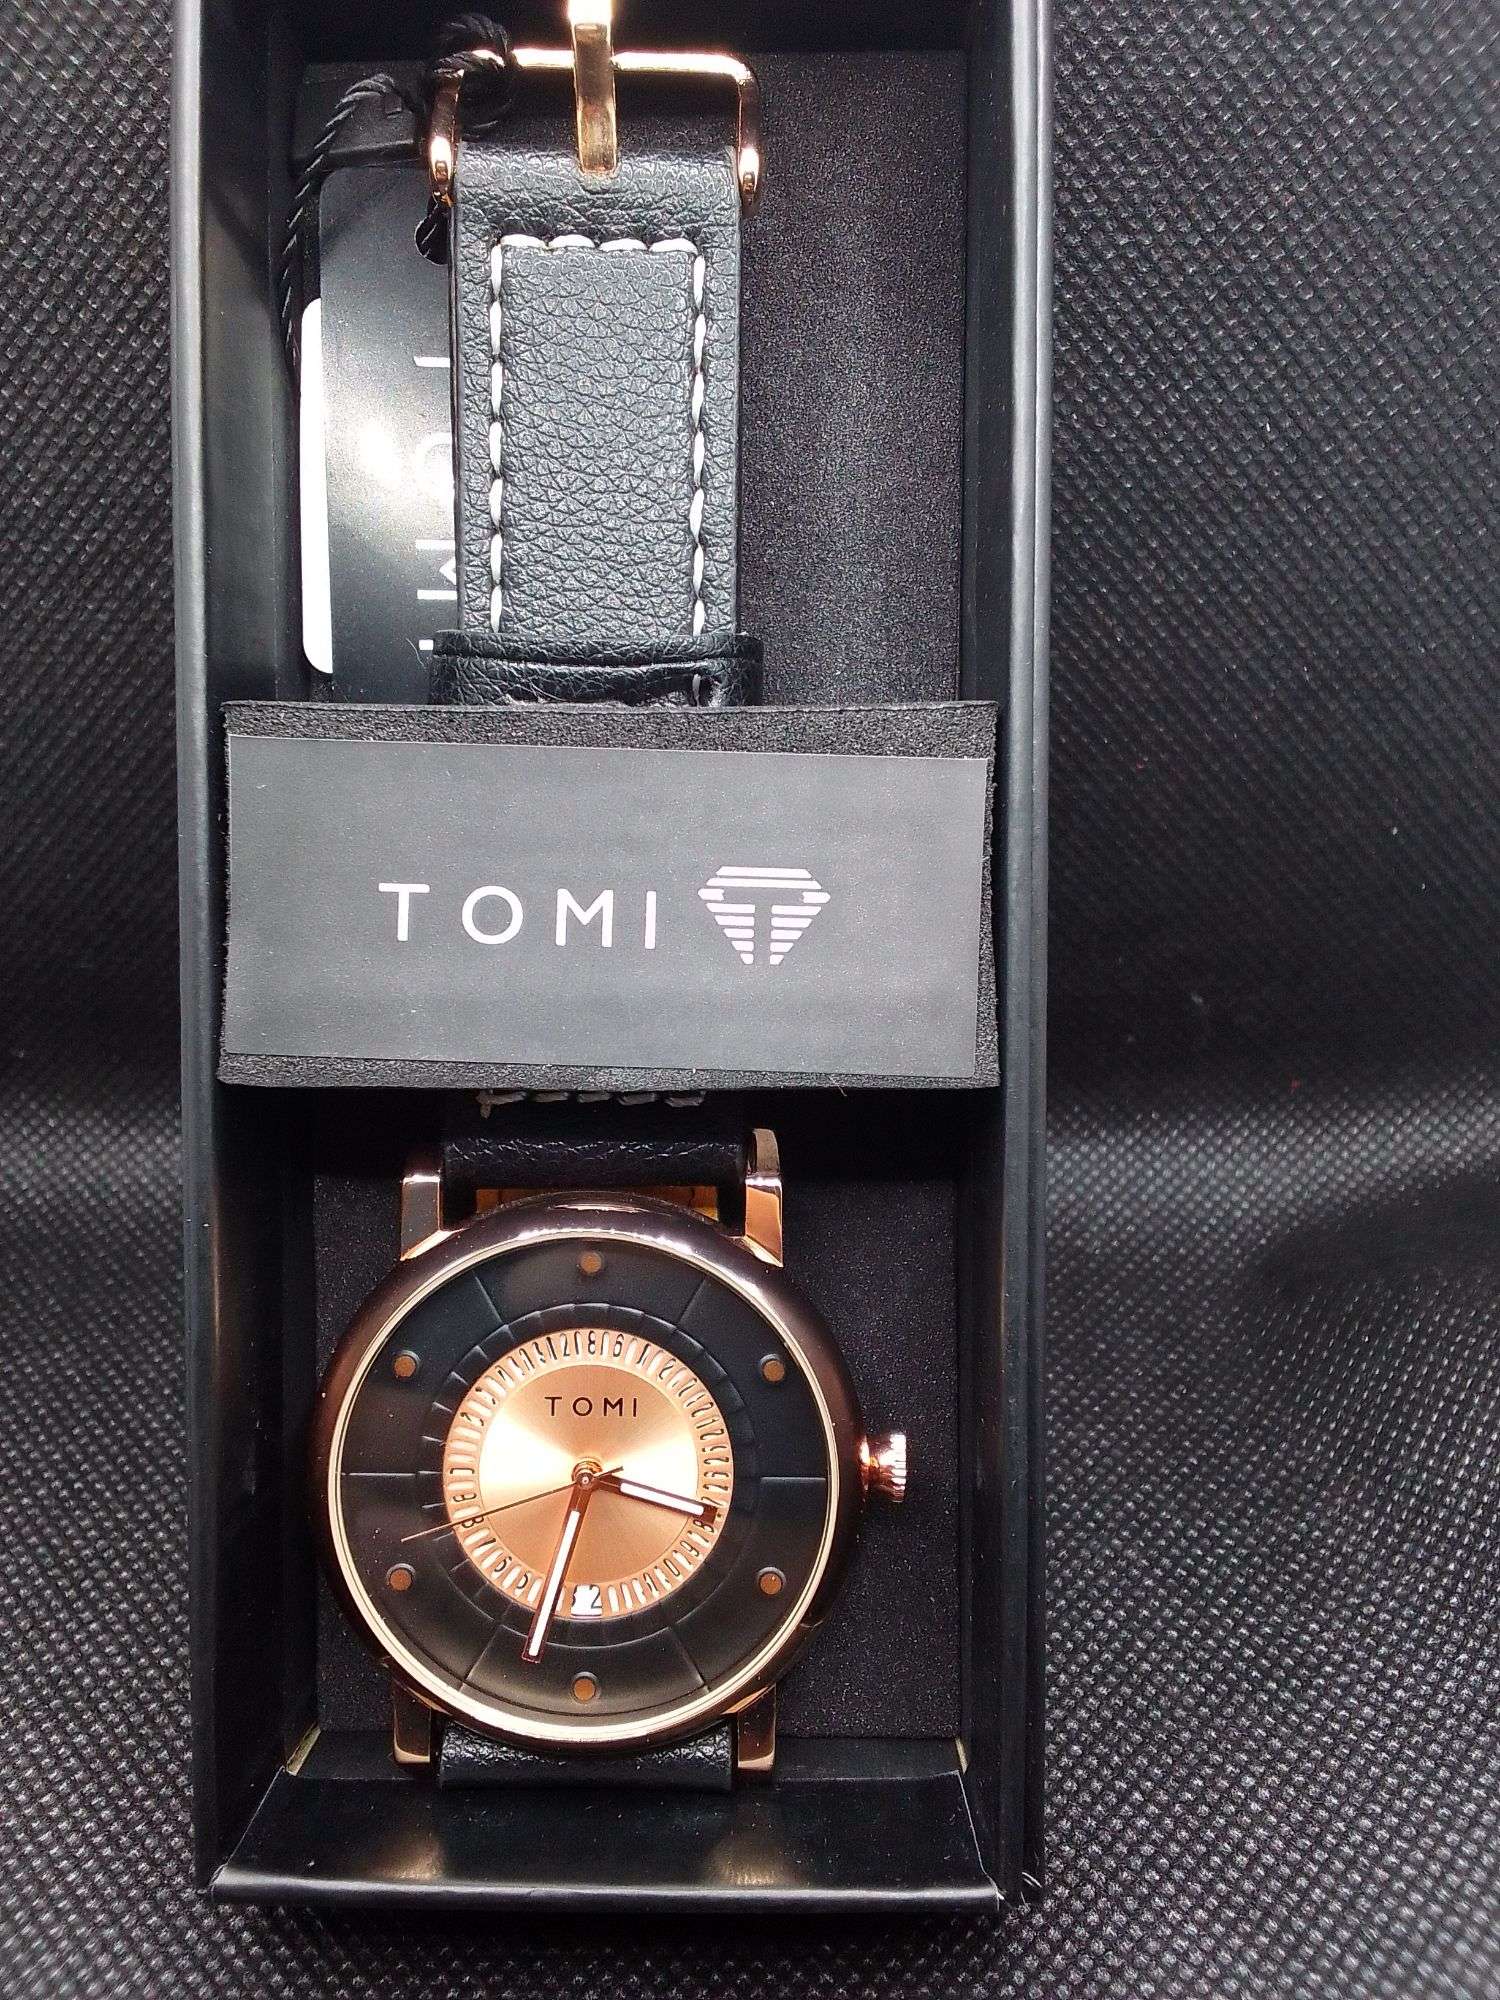 hot brand tomi watch t100 high| Alibaba.com